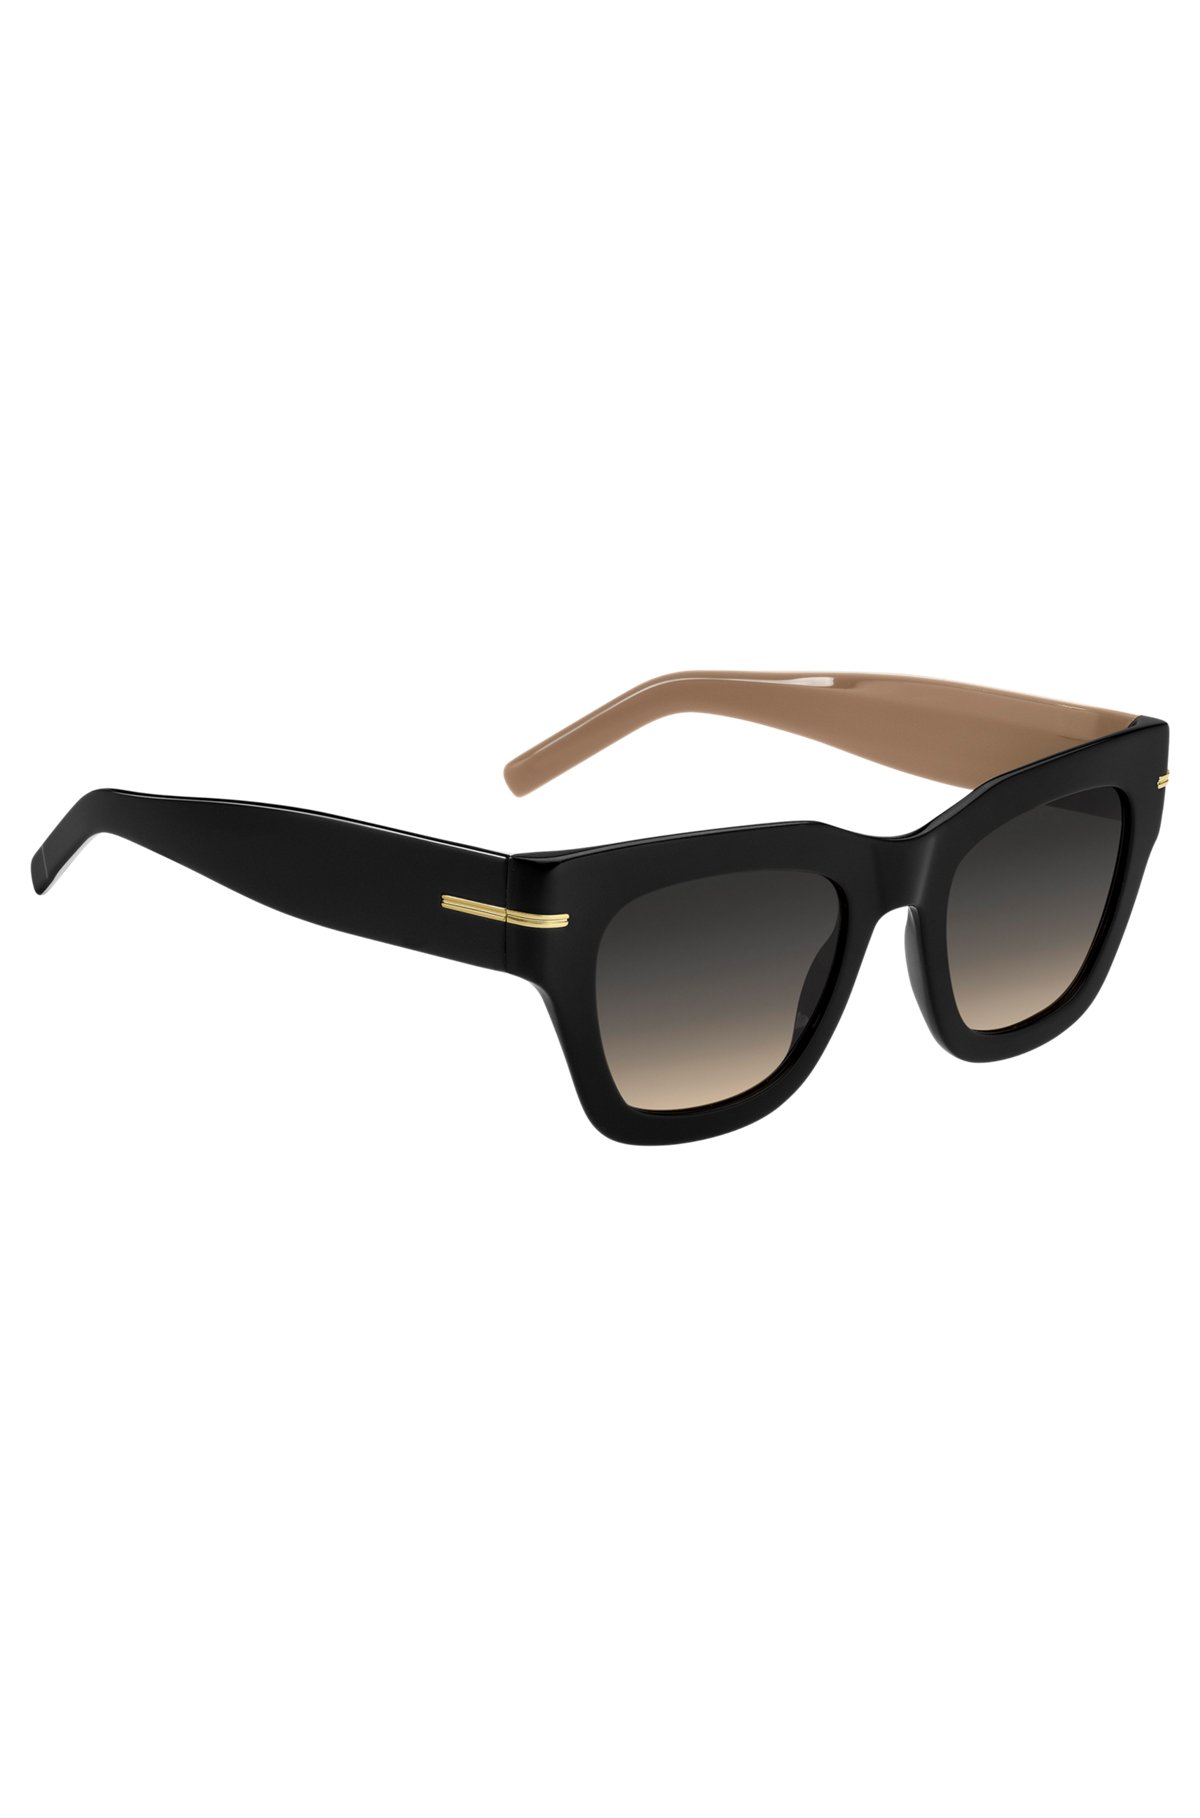 Black-acetate sunglasses with chain strap, Black